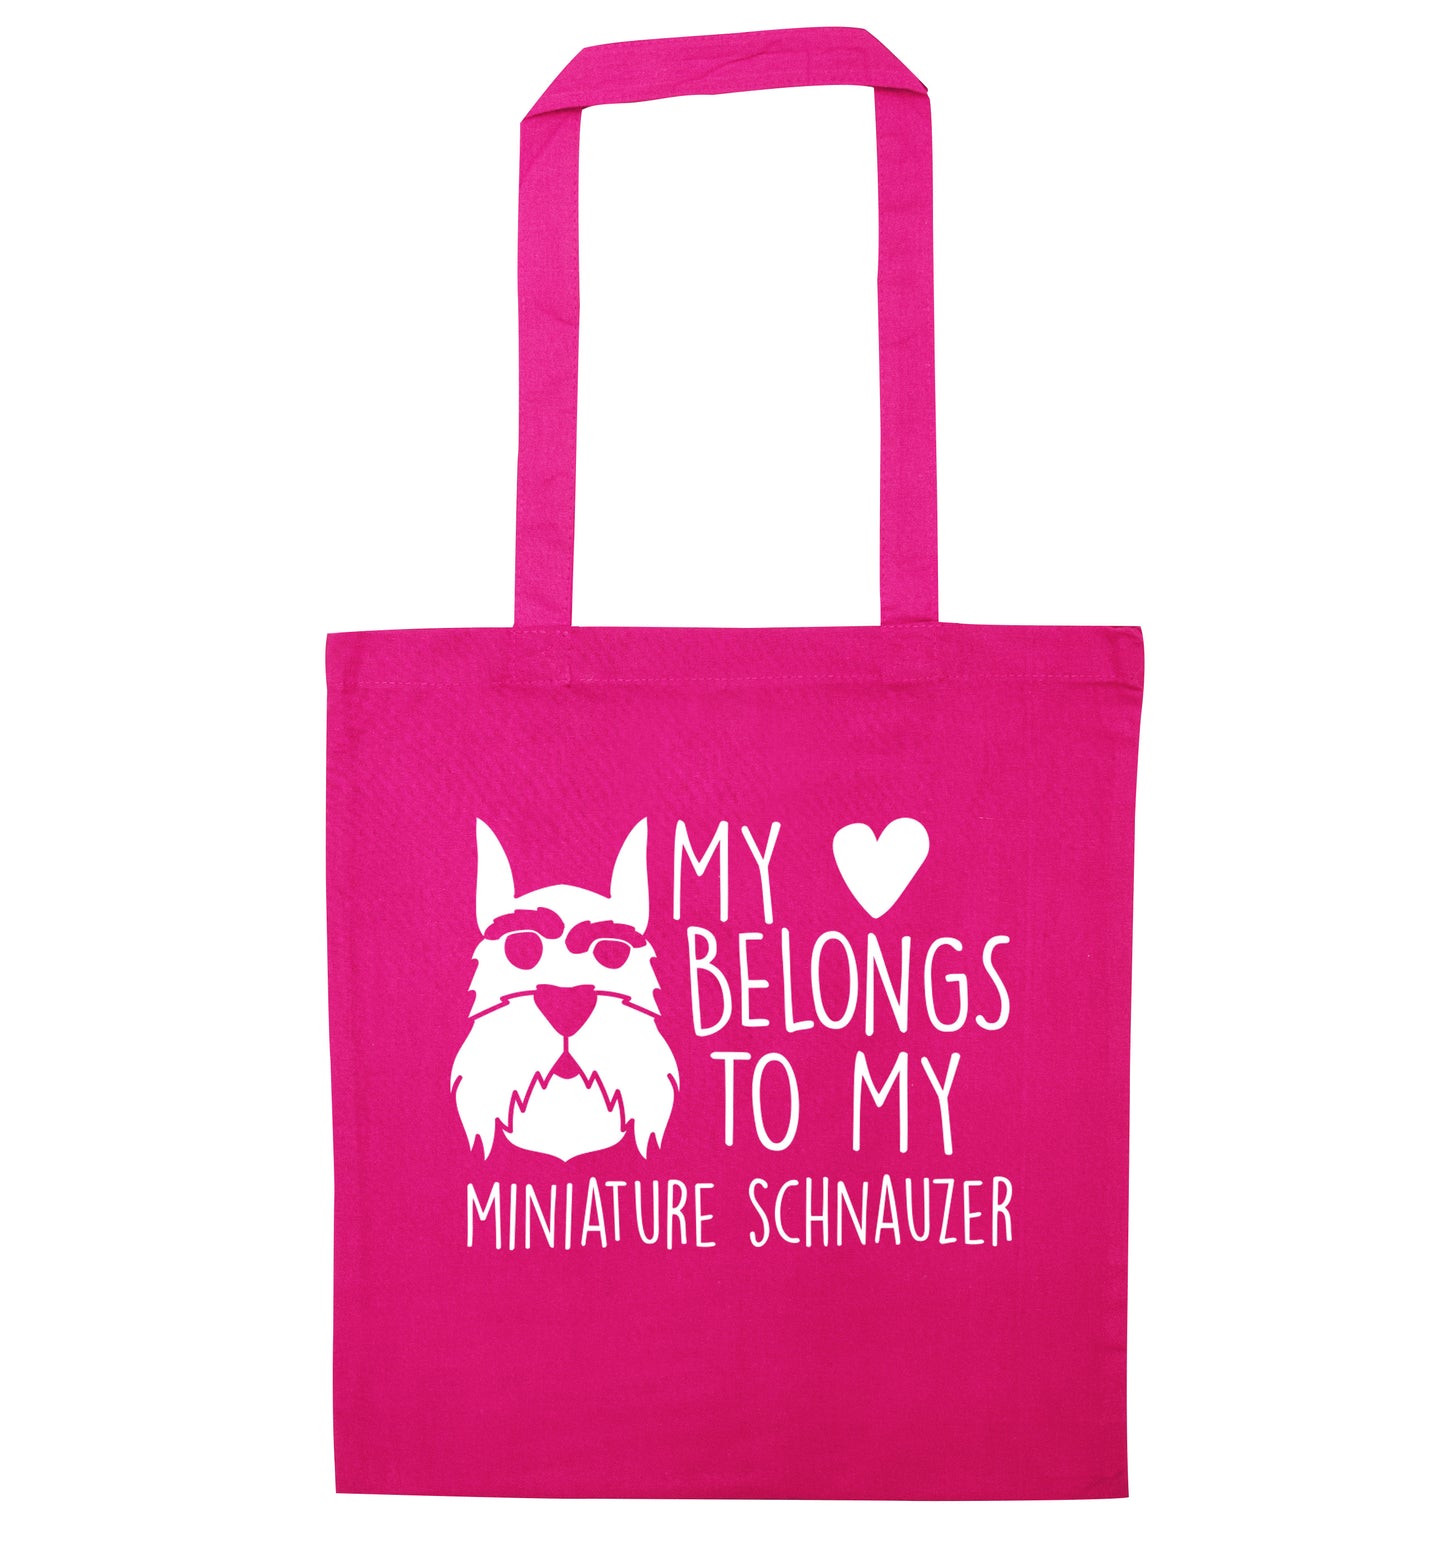 My heart belongs to my miniature schnauzer pink tote bag